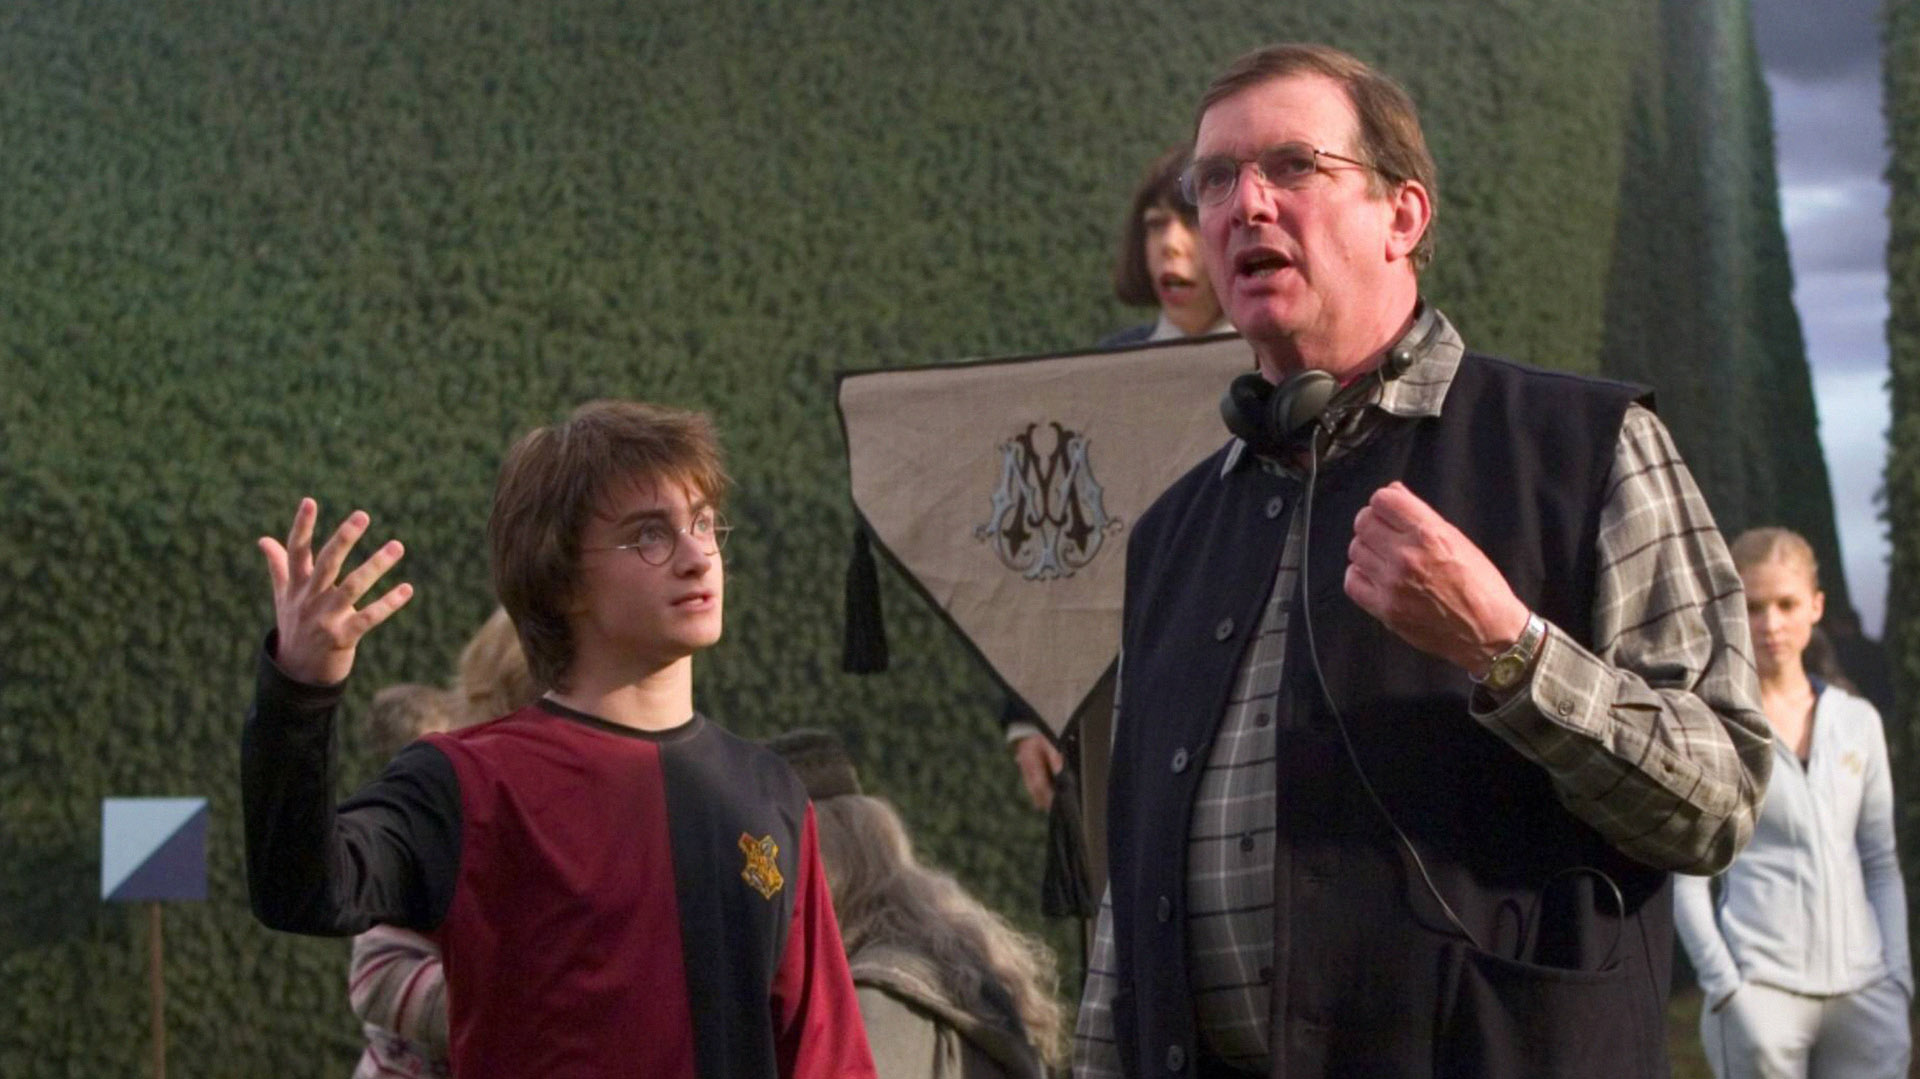 Harry Potter Fight Scene Left Goblet of Fire Director with Broken Ribs